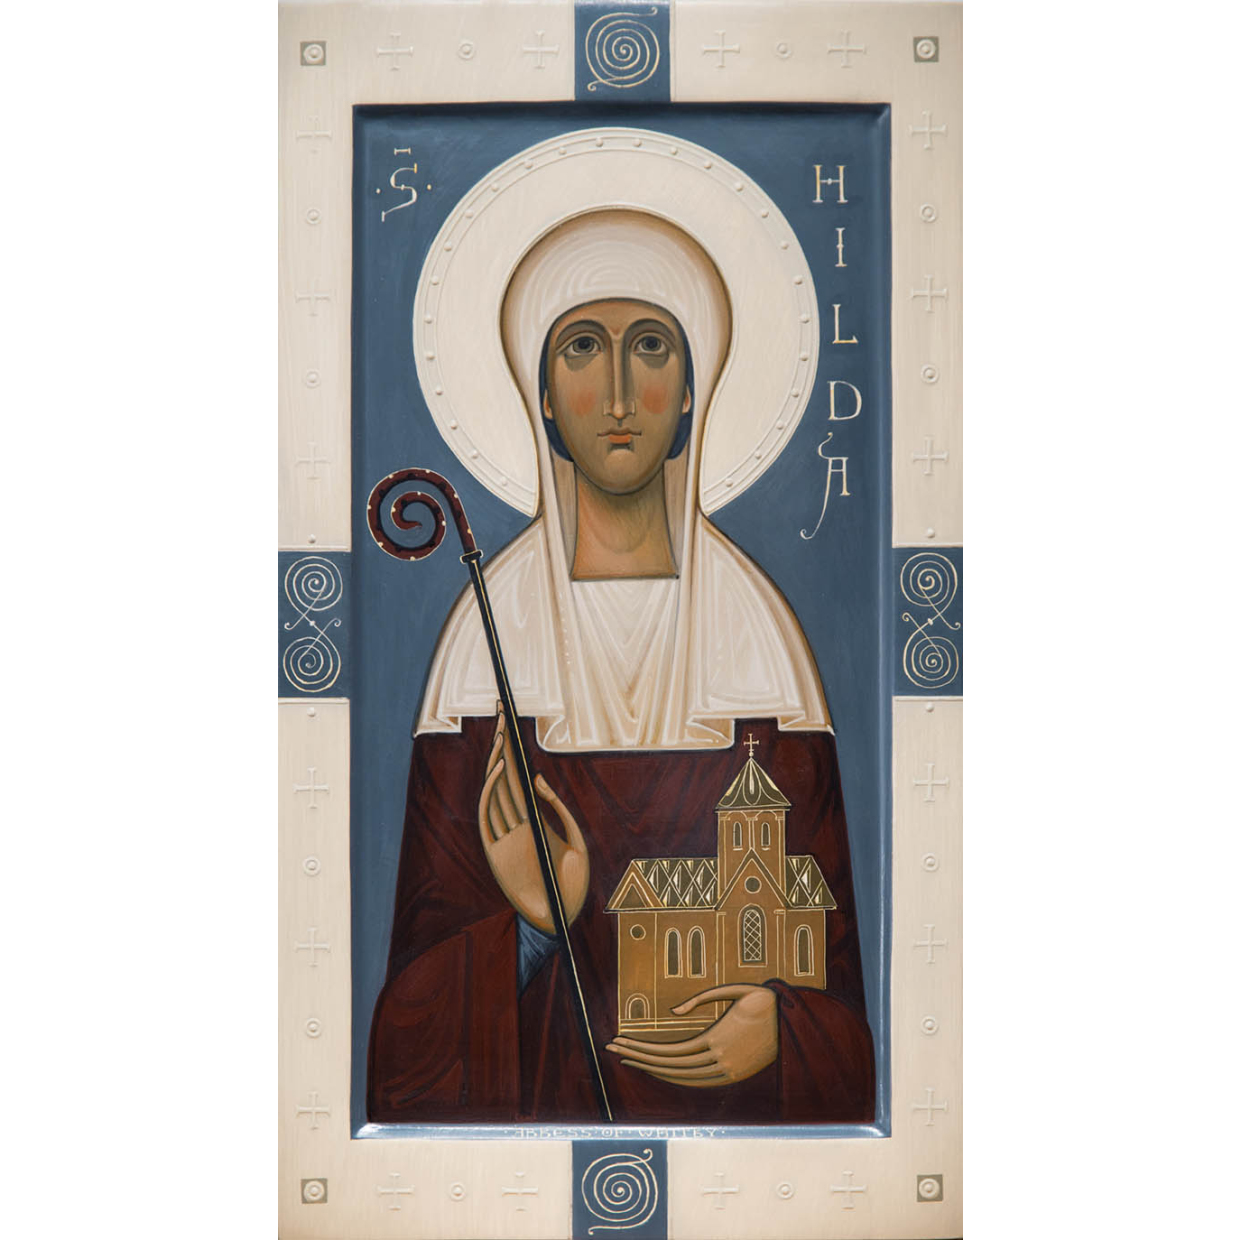 Saint Hilda of Whitby